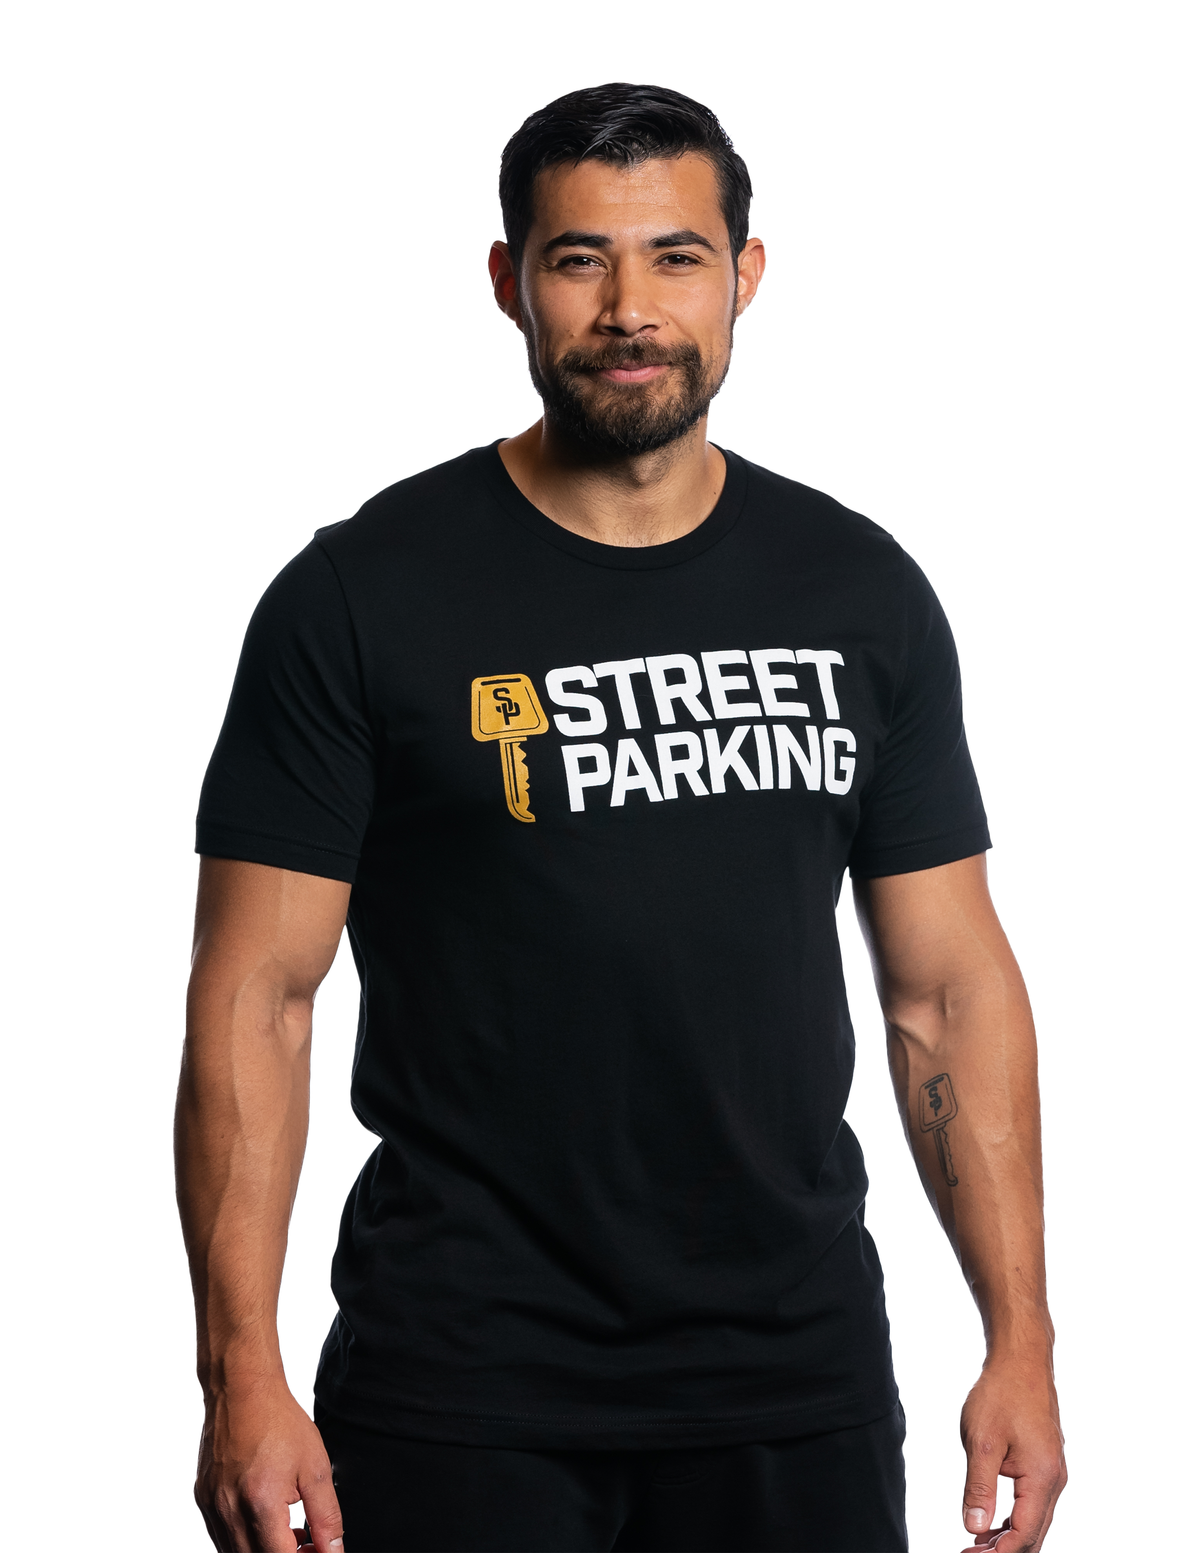 Street Parking Tee - Men's - Street Parking